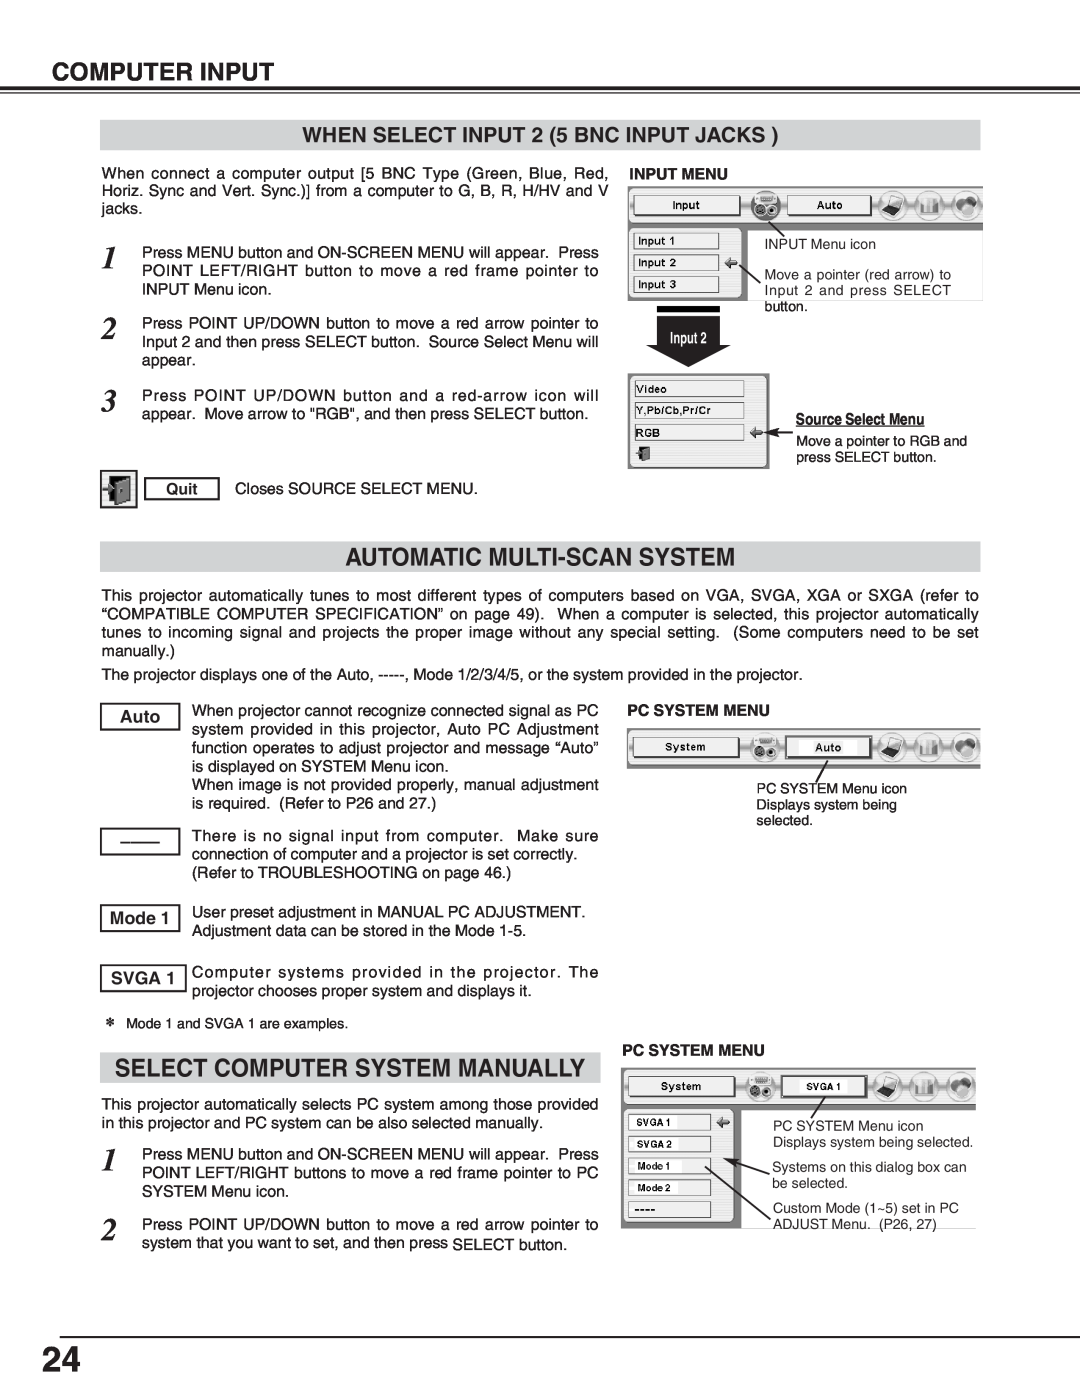 Eiki LC-X70 instruction manual Select Computer System Manually, Source Select Menu, Quit, Pc System Menu 